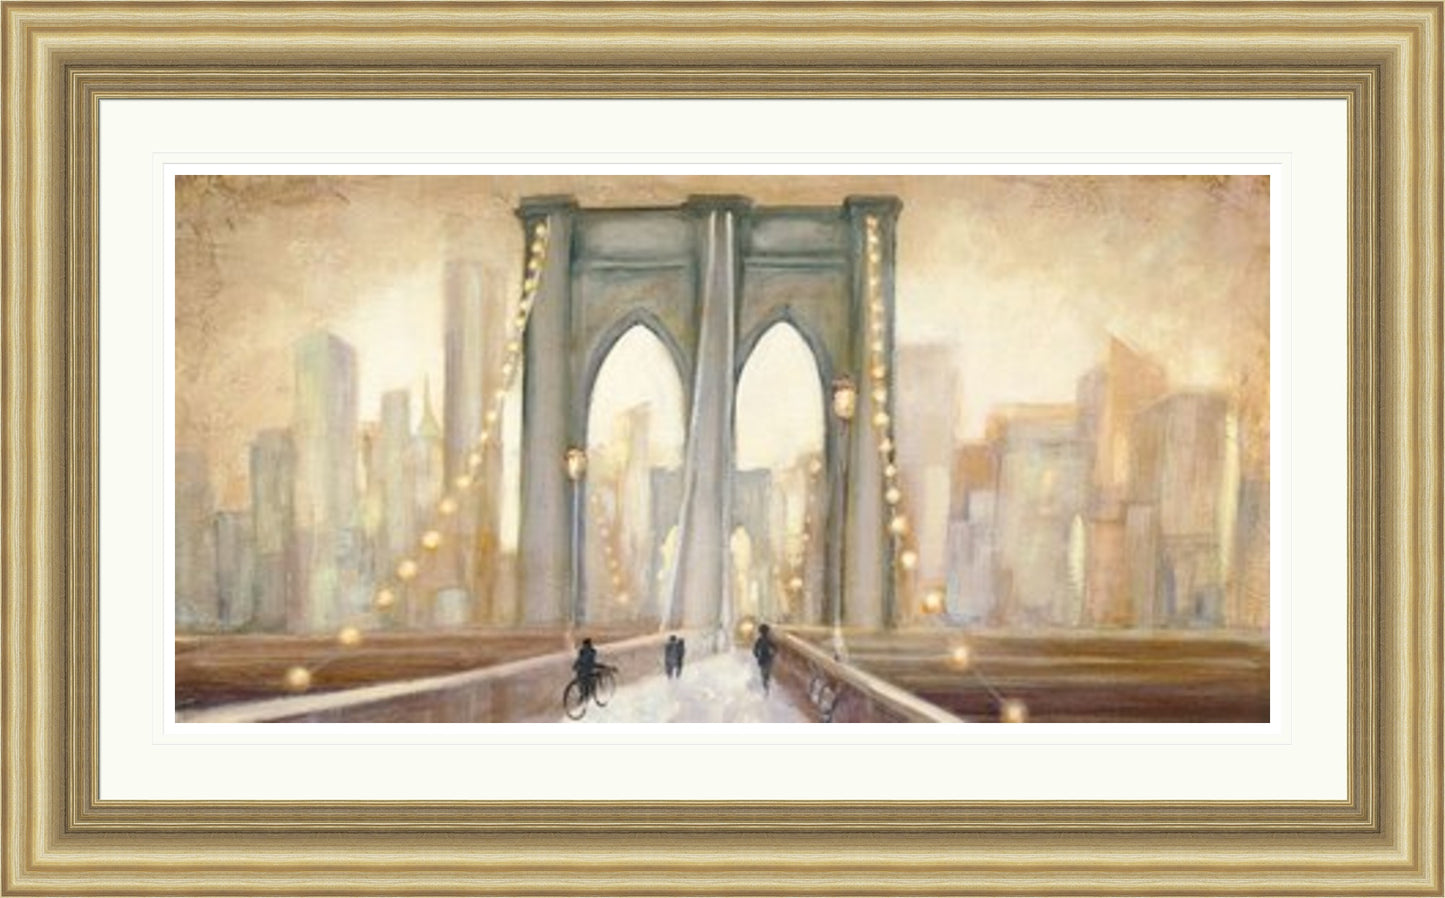 Bridge to New York by Julia Purinton